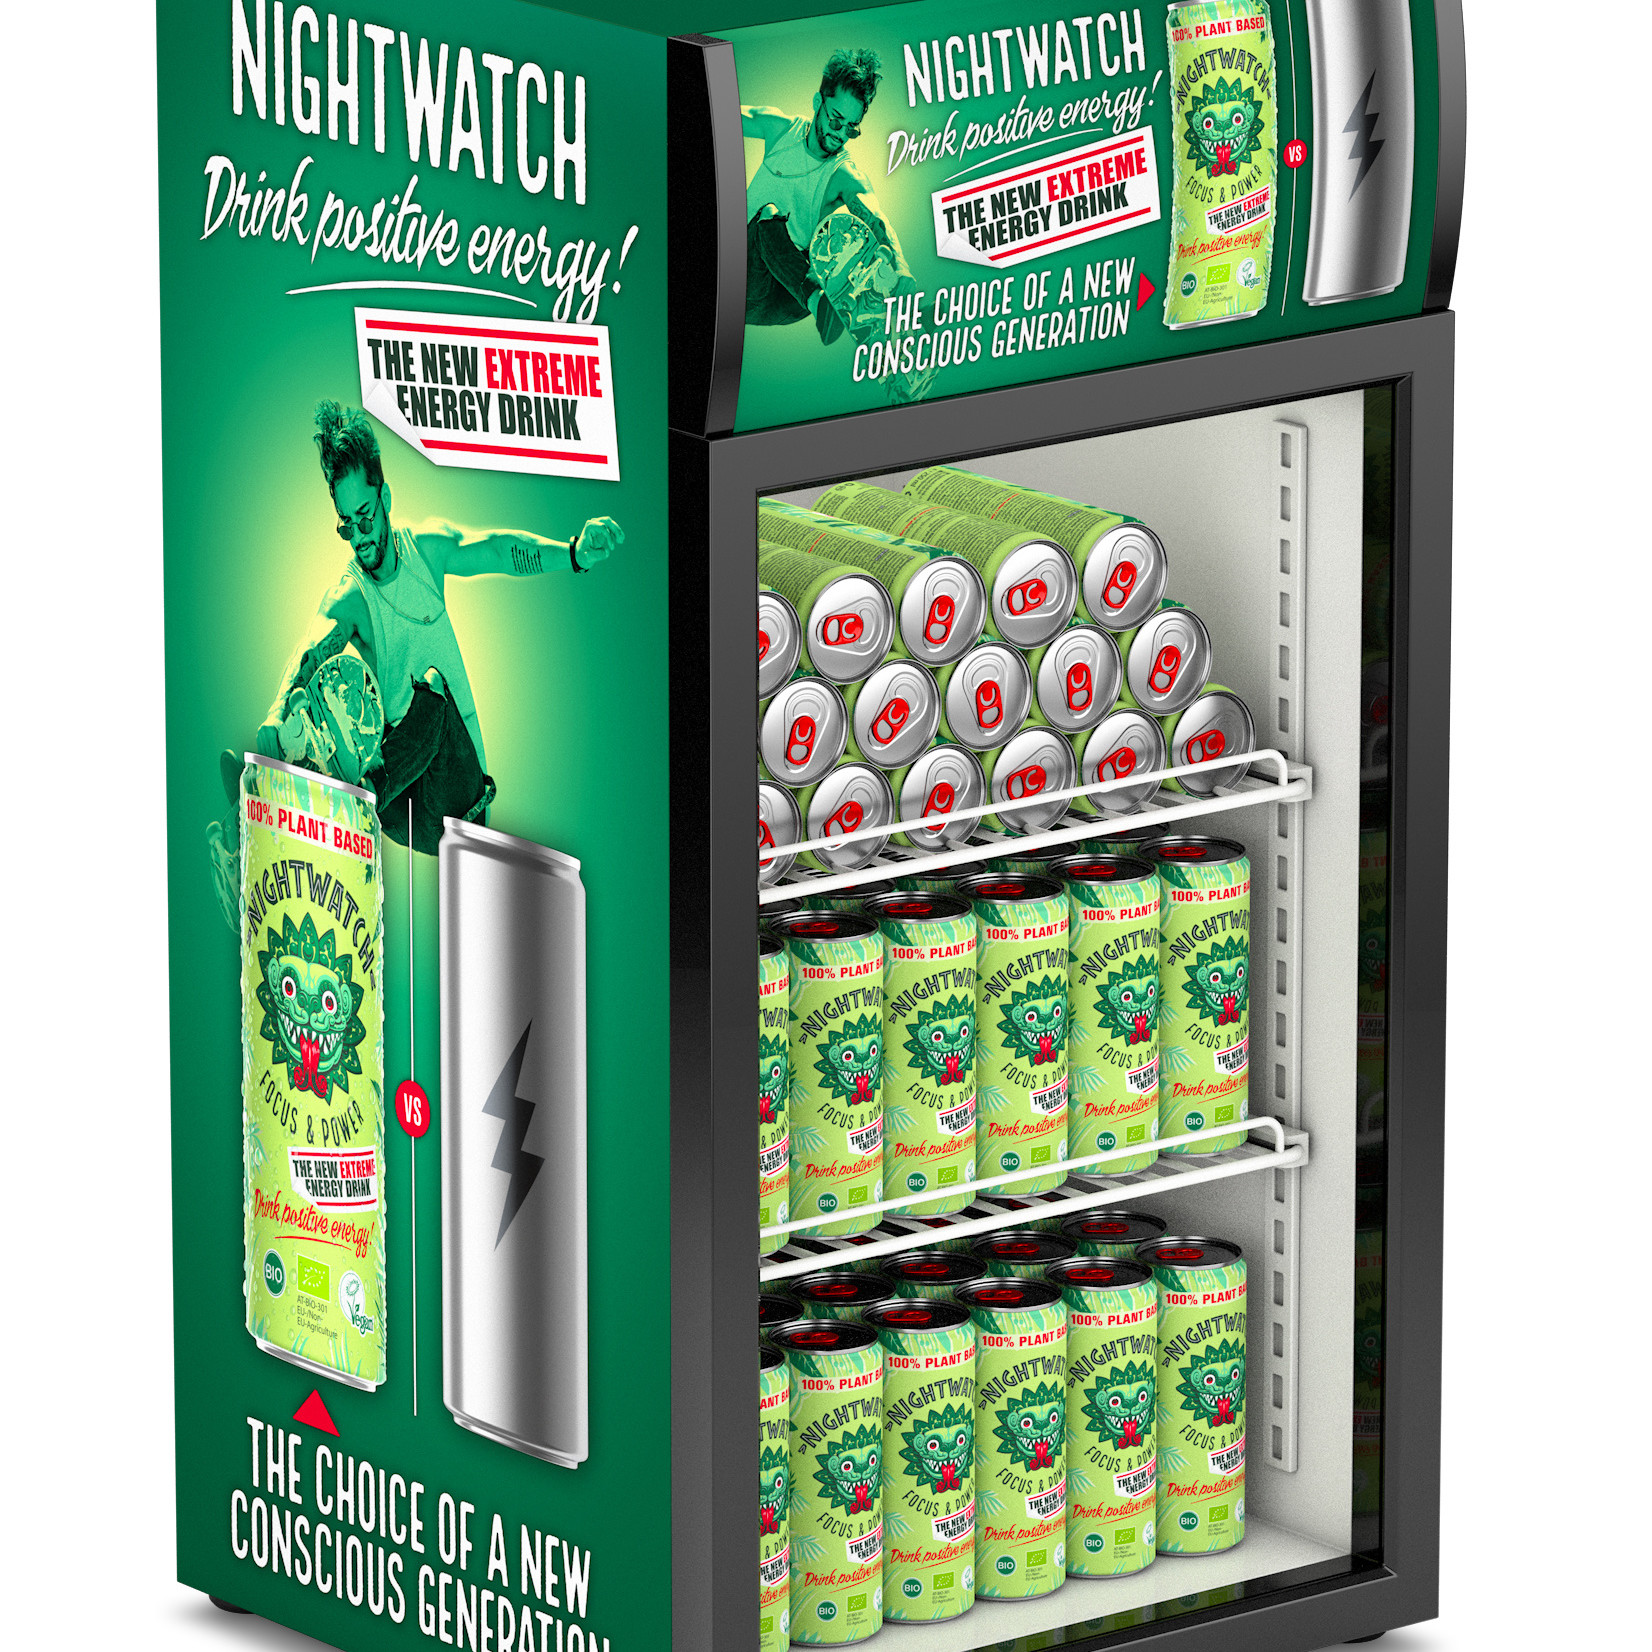 NIGHTWATCH Promotie: Nightwatch branded koelkast + 10 Tray Nightwatch